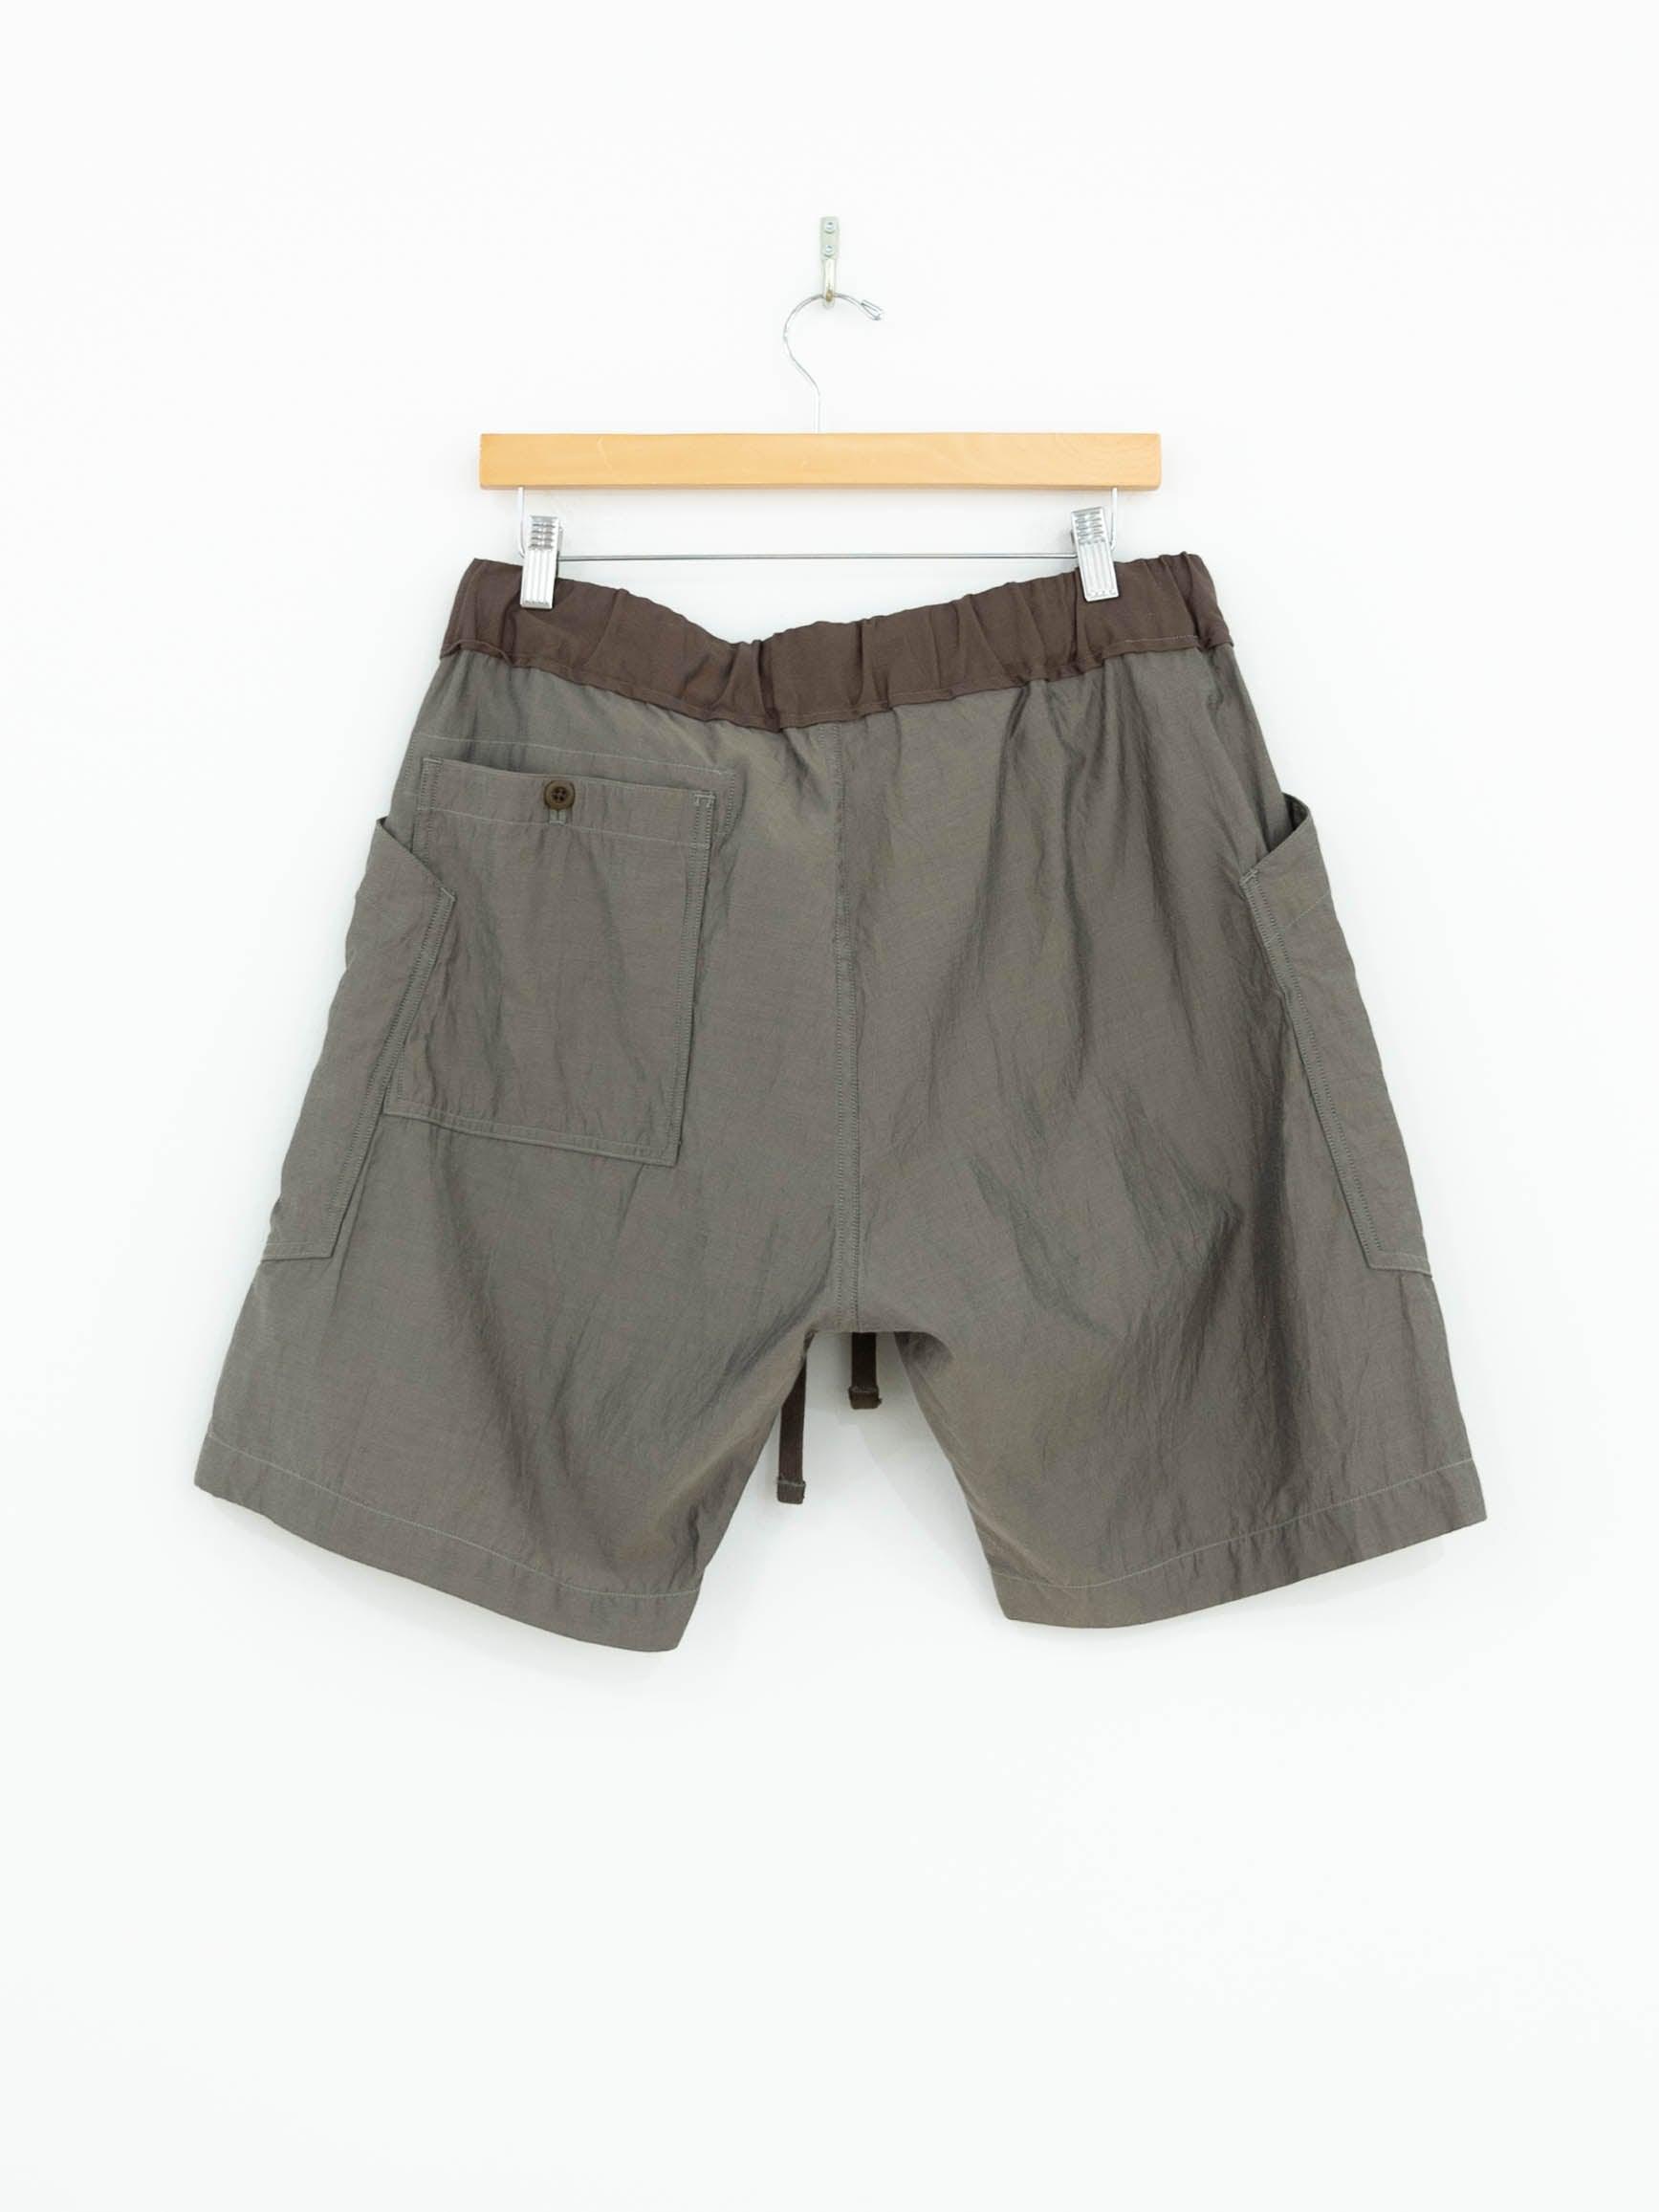 Namu Shop - ts(s) Cotton Silk Chambray Loose Fit Shorts - Beige Gray